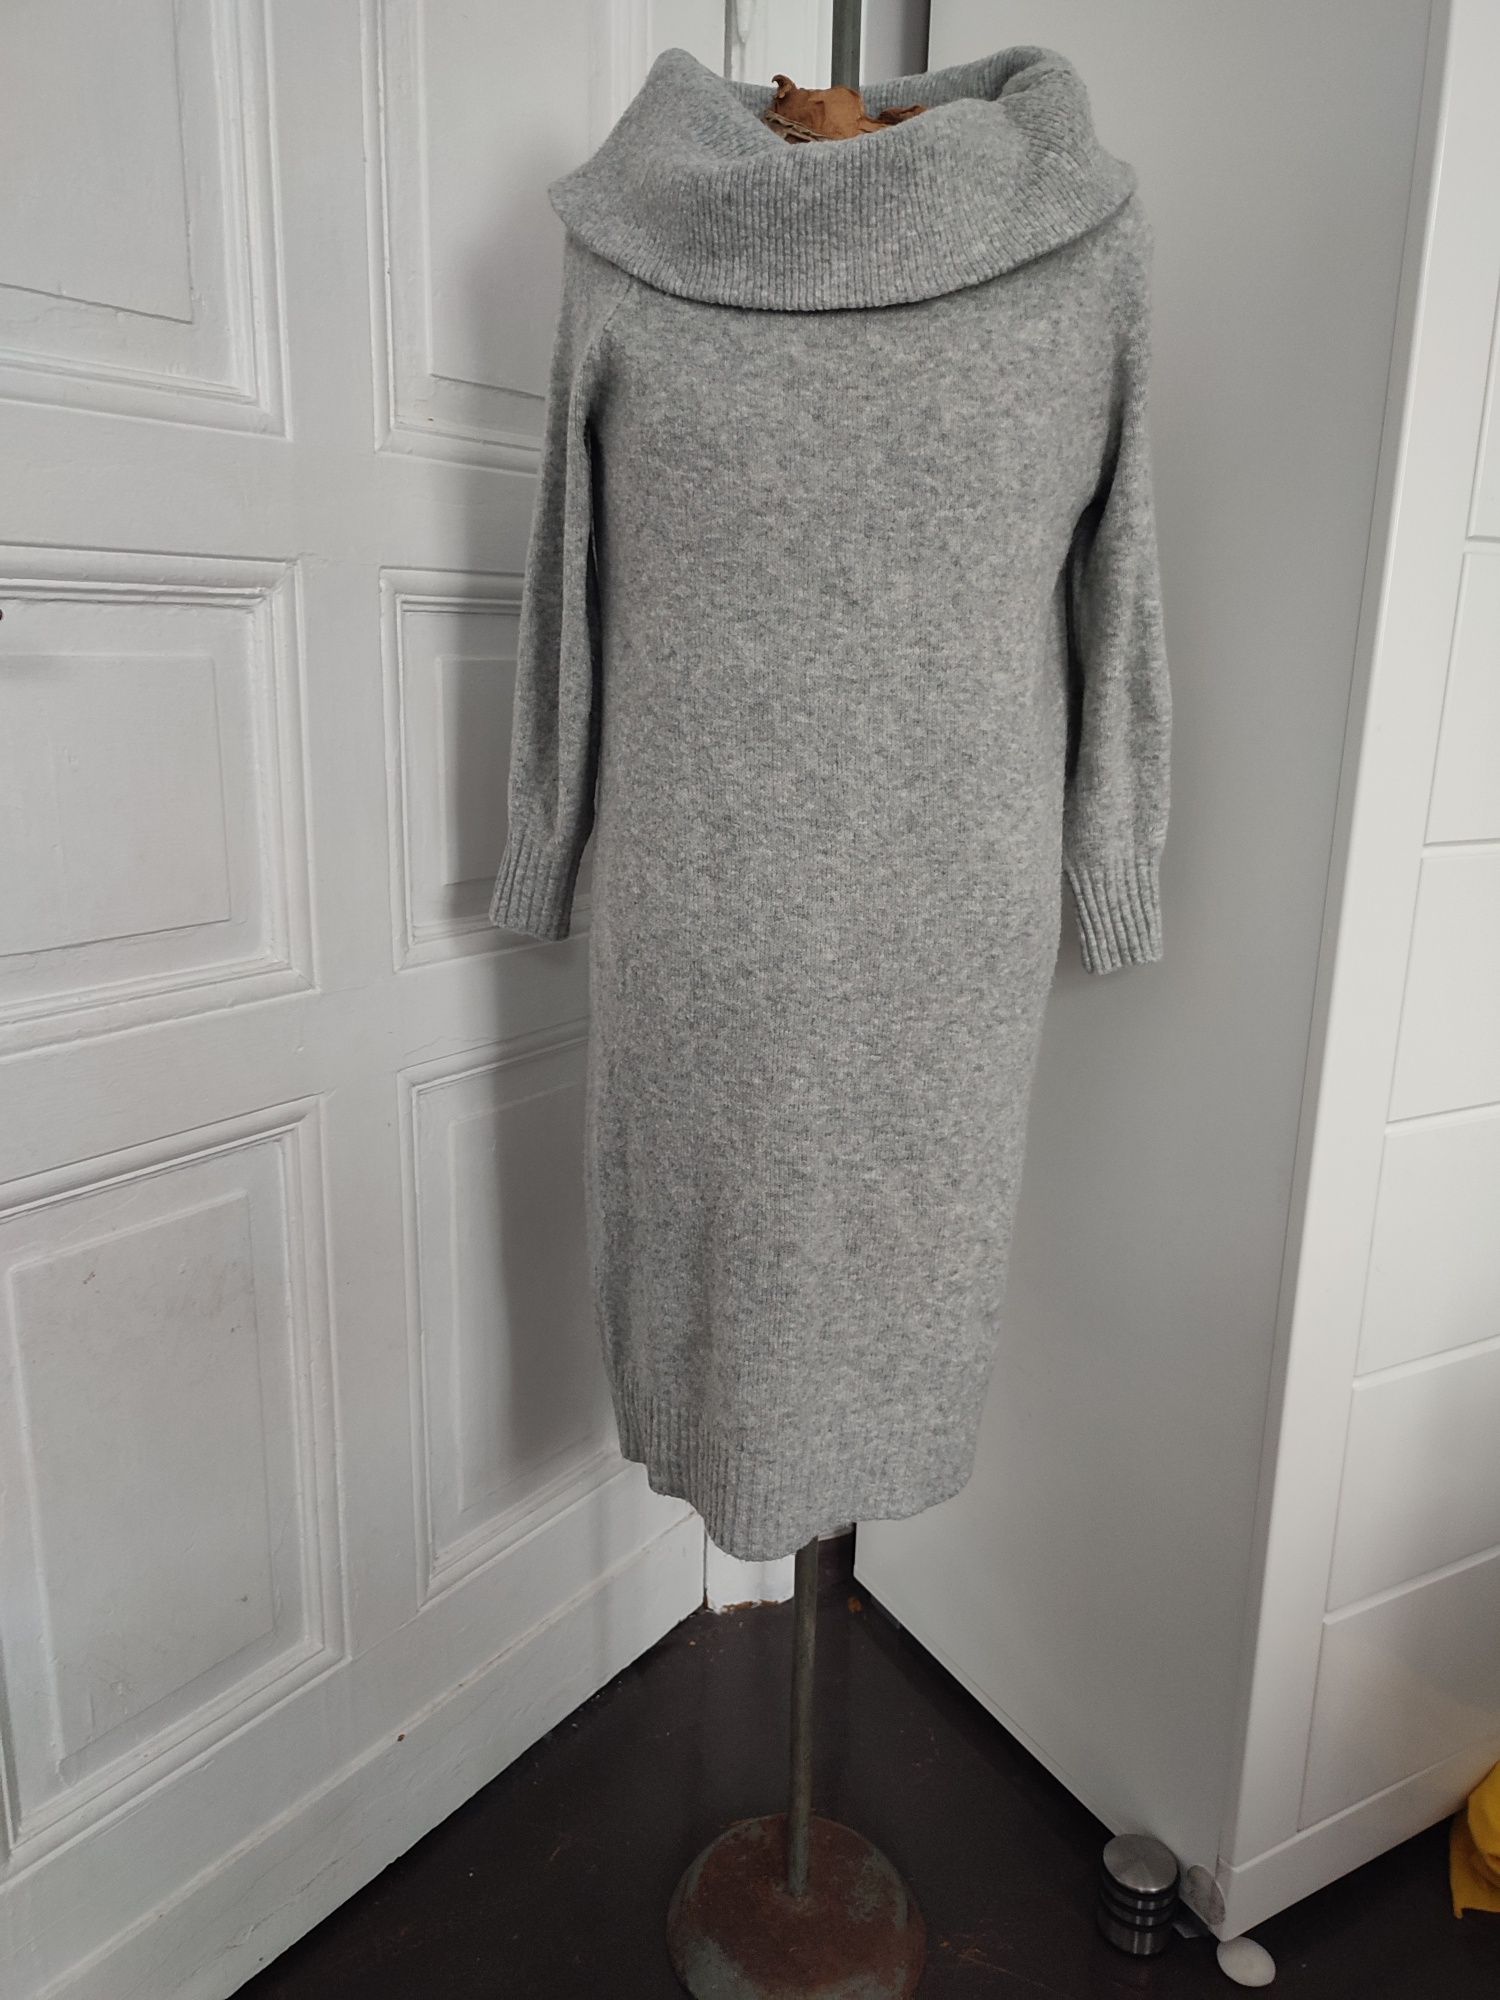 Szara popielata sukienka sweterekowa rozmiar M H&M